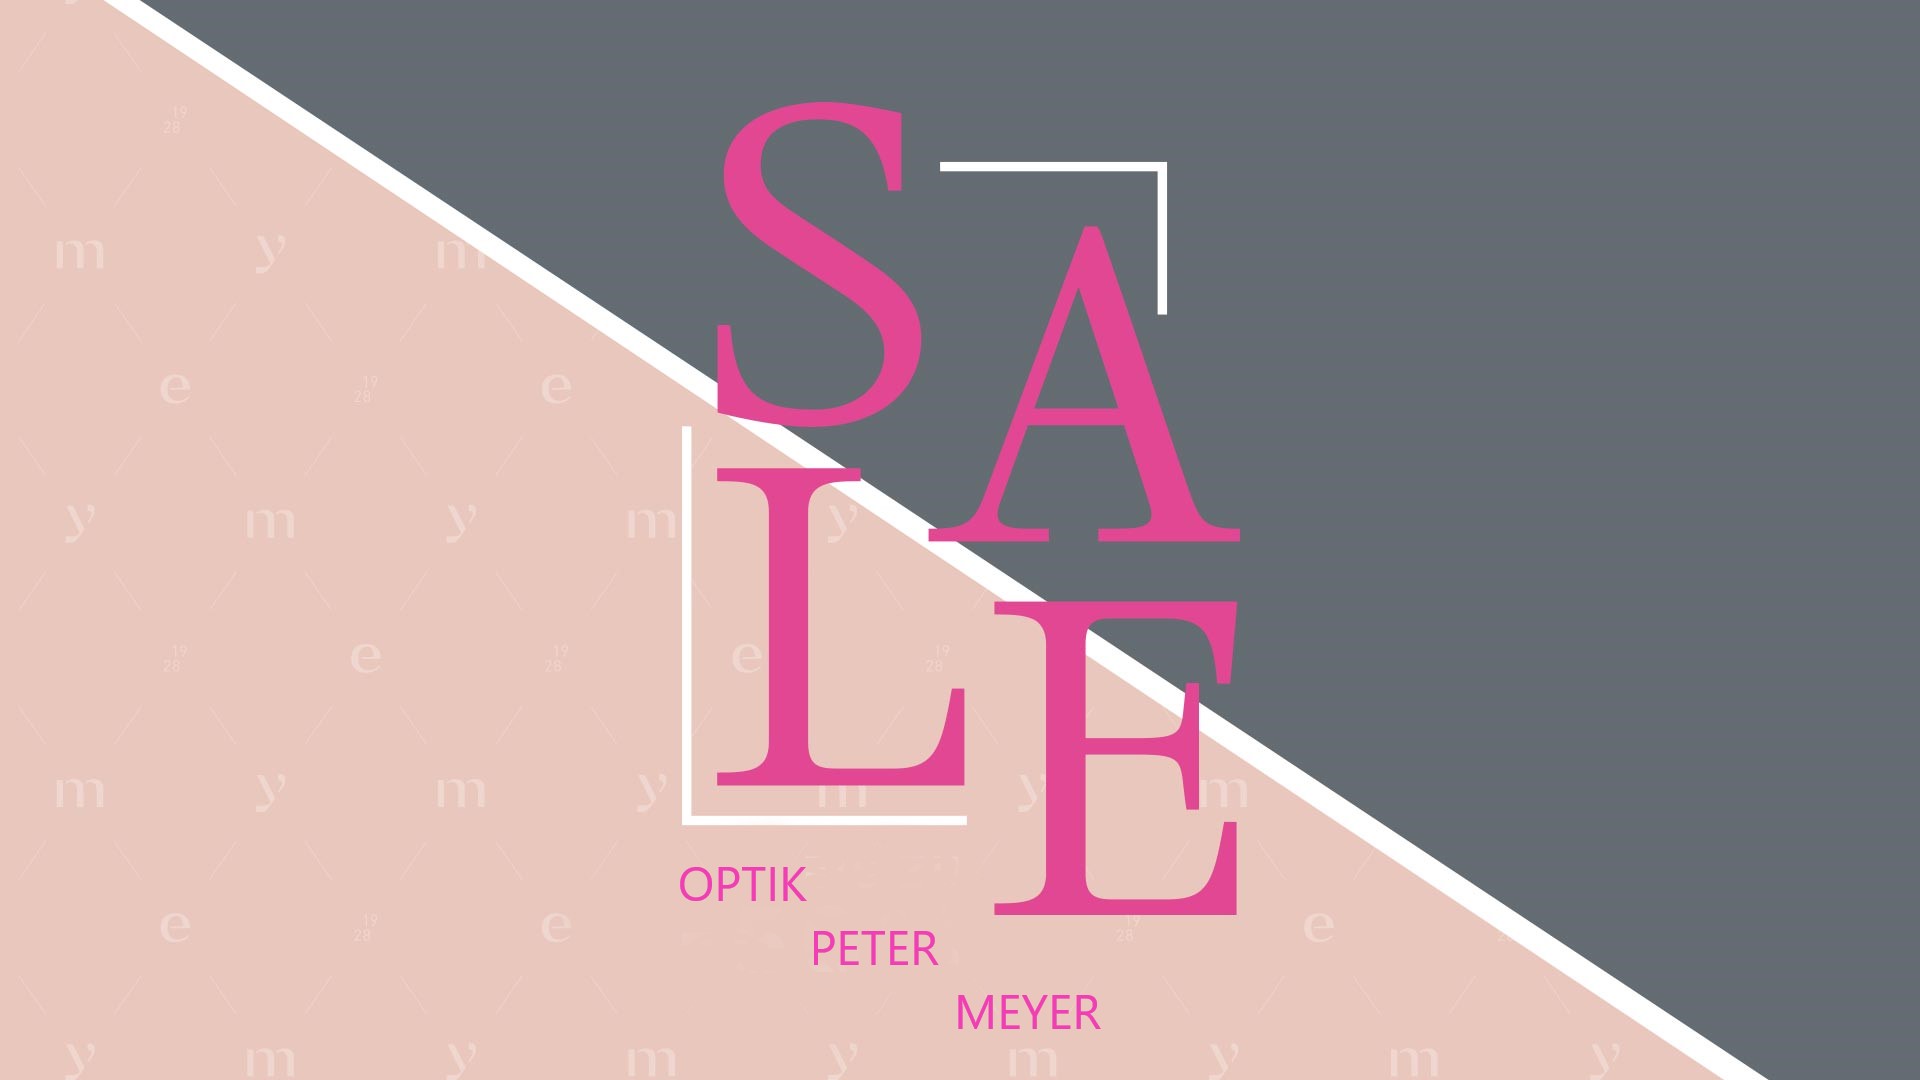 Optik Peter Meyer Sale